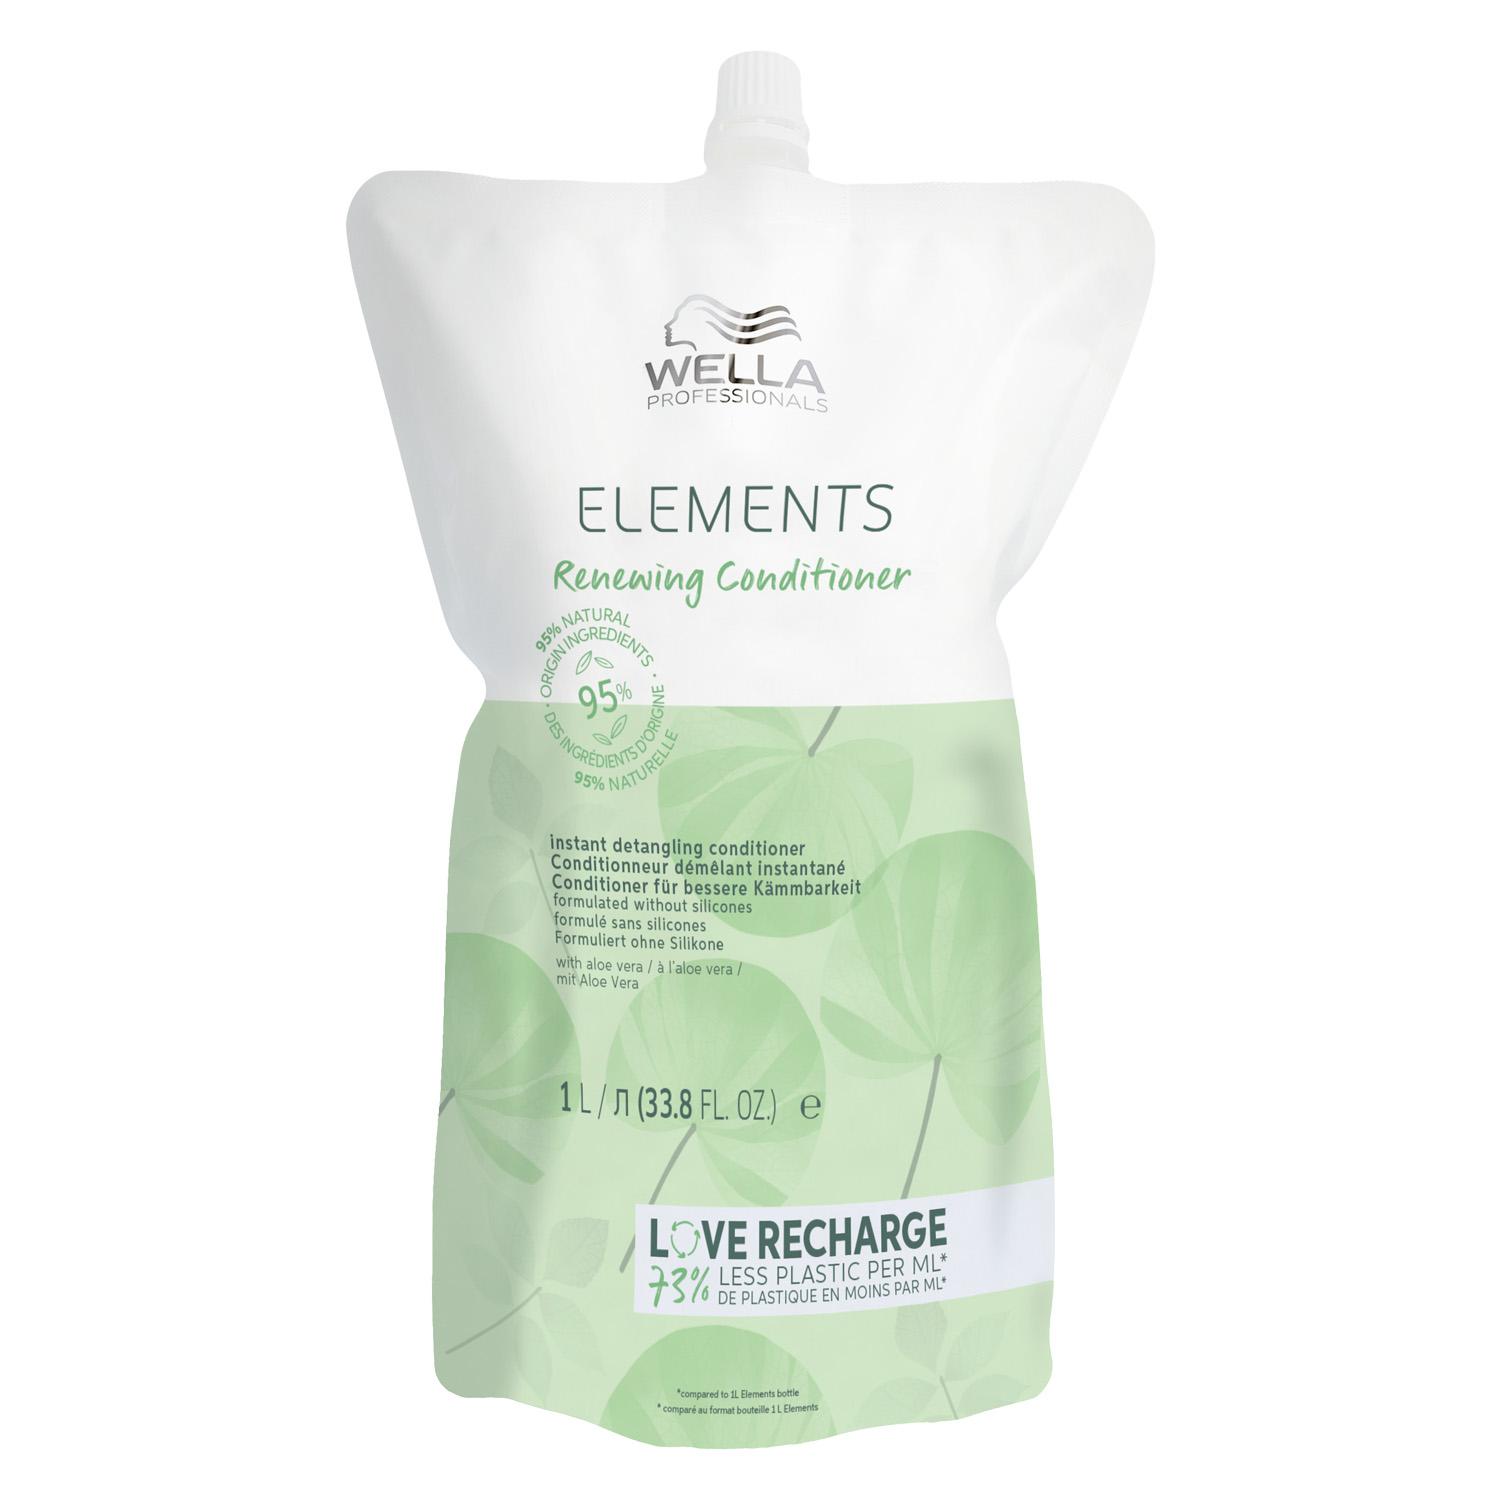 Elements - Renewing Conditioner Refill